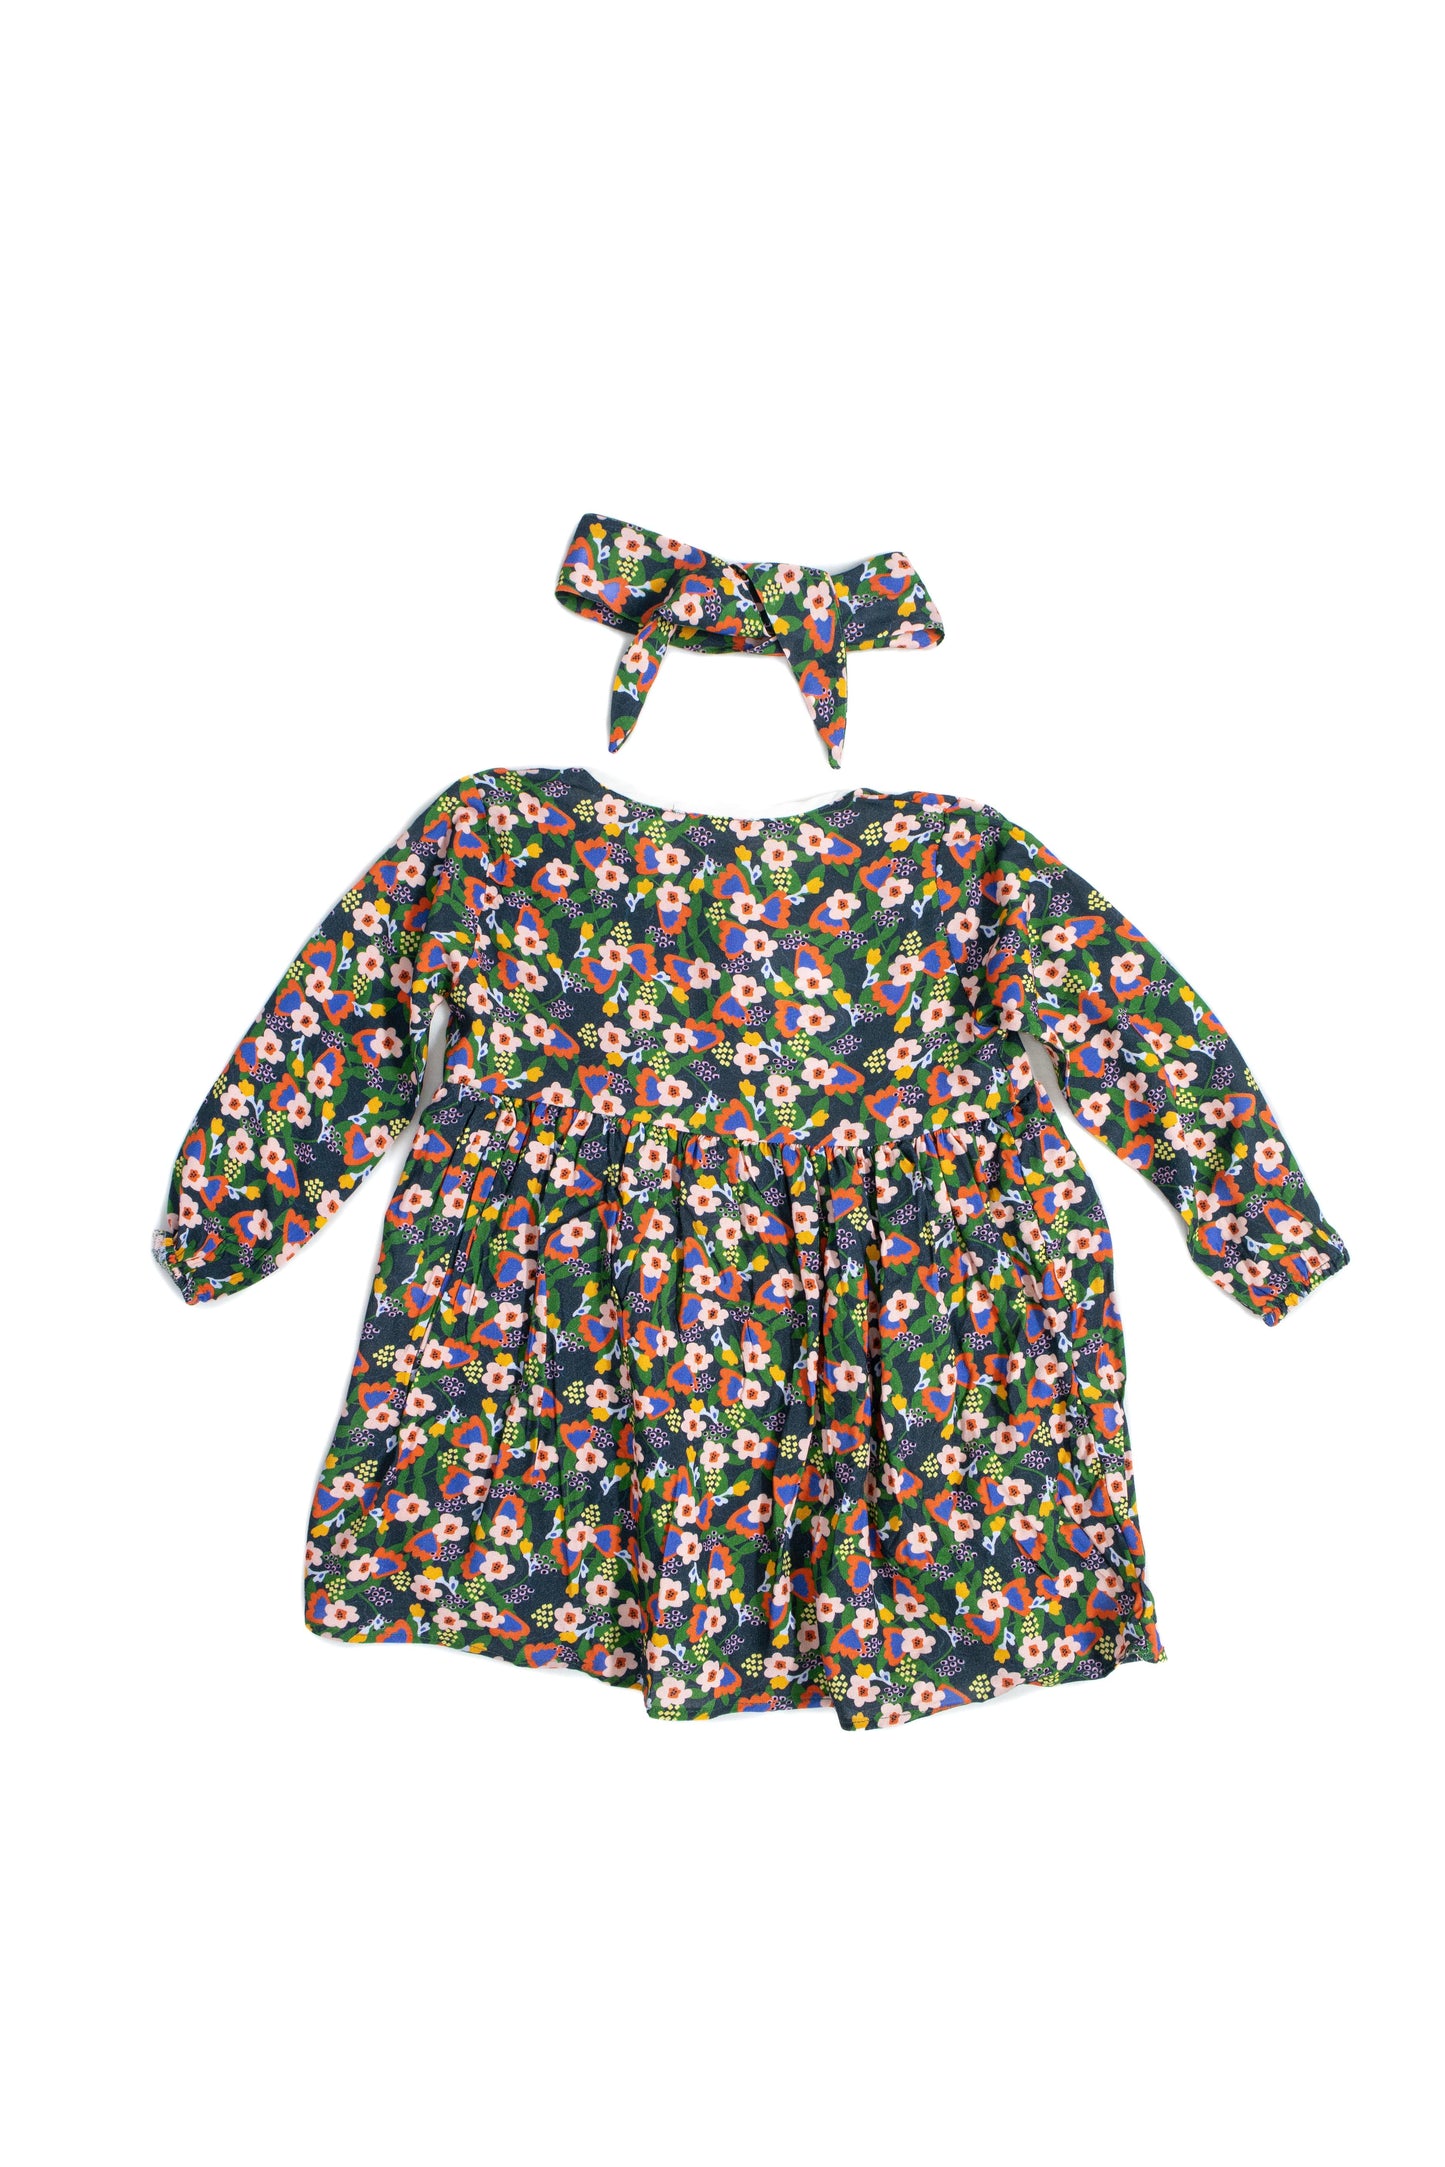 Children's 100% Cotton Fabric Printed Ruffle Dress and Headband